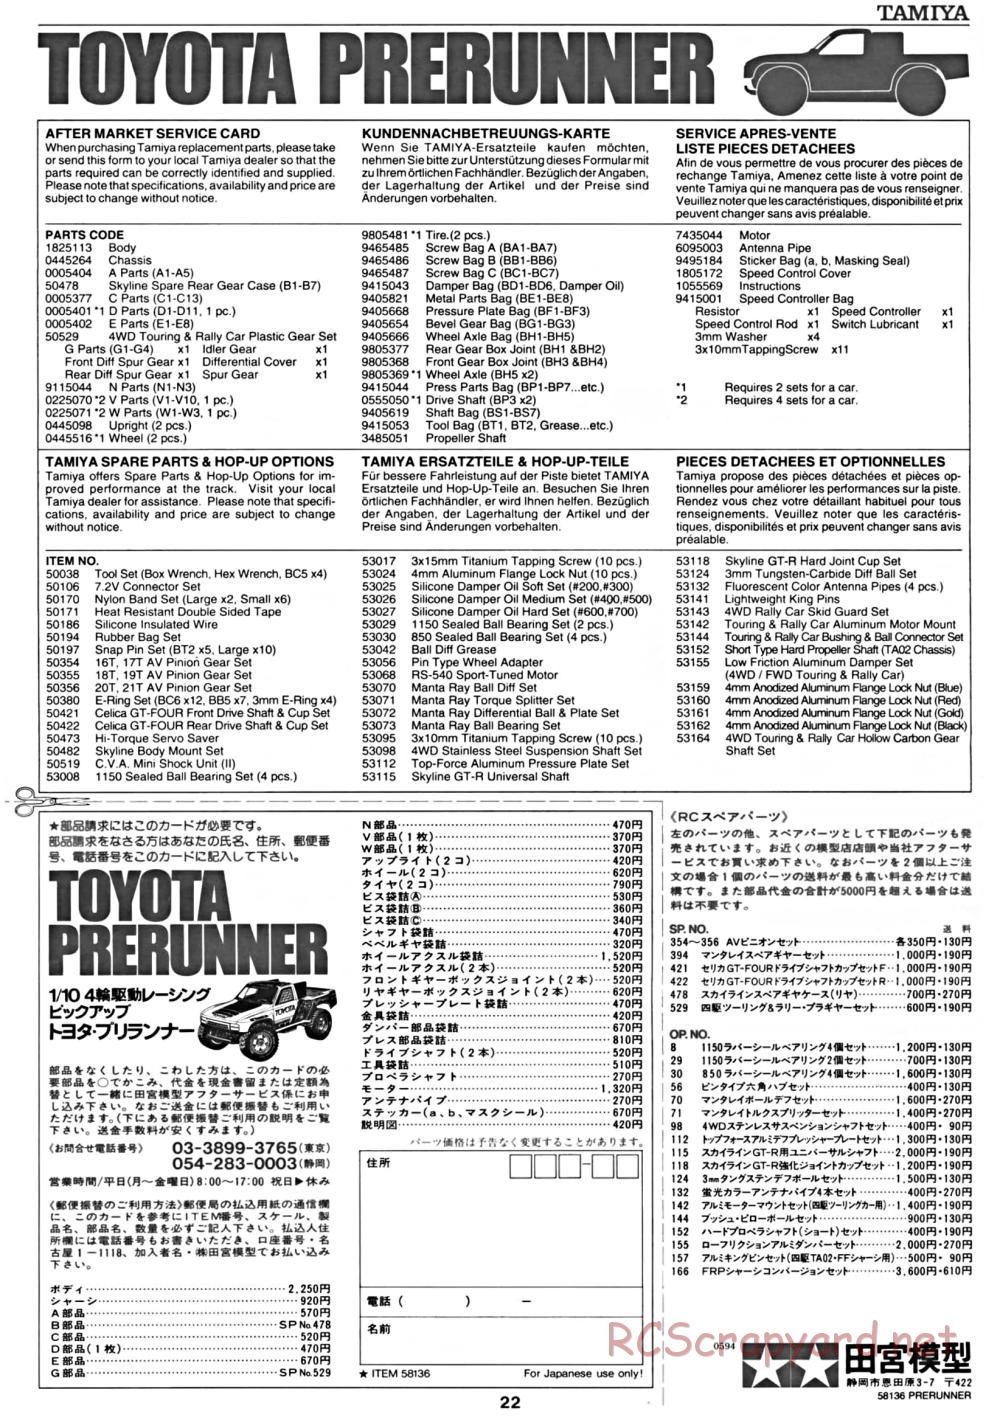 Tamiya - Toyota Prerunner Chassis - Manual - Page 22